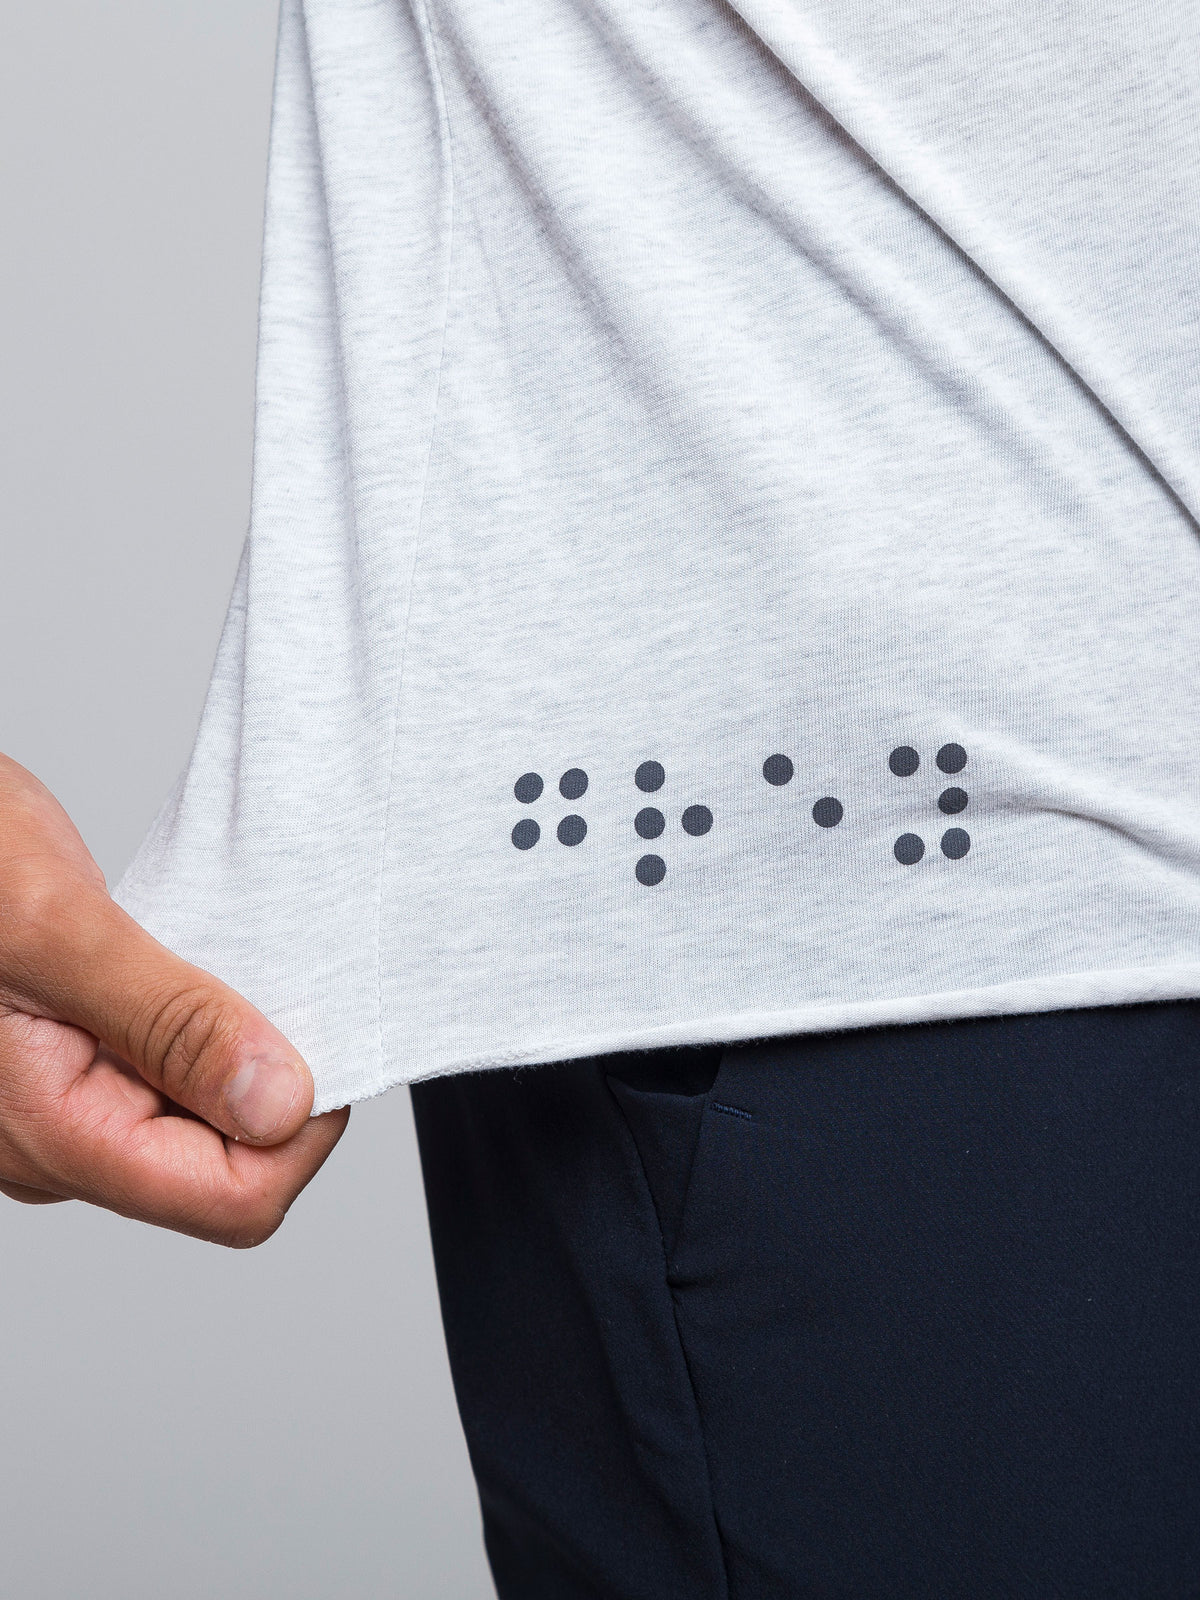 Nike Nike Team Baseball Button Simple Jerseys T-shirt Tee